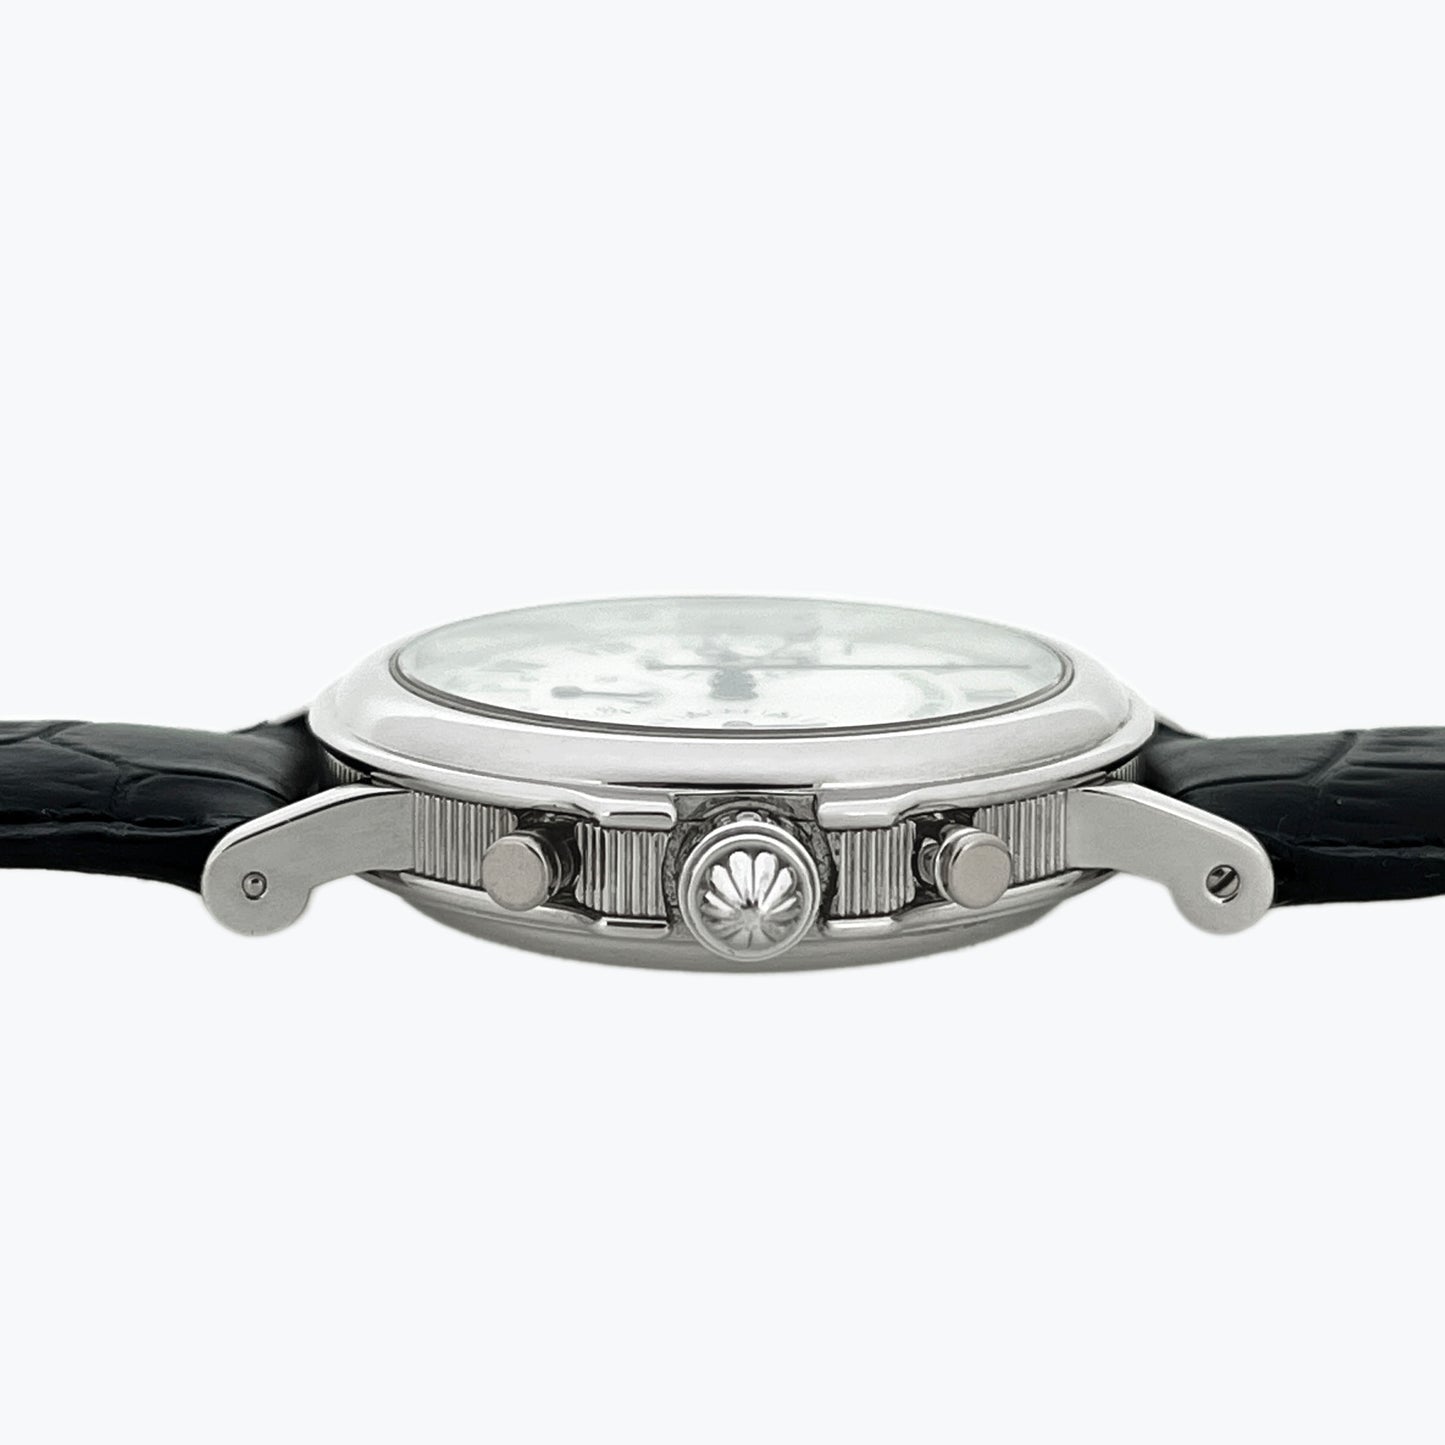 Breguet La Marine Chronograph, Platinum